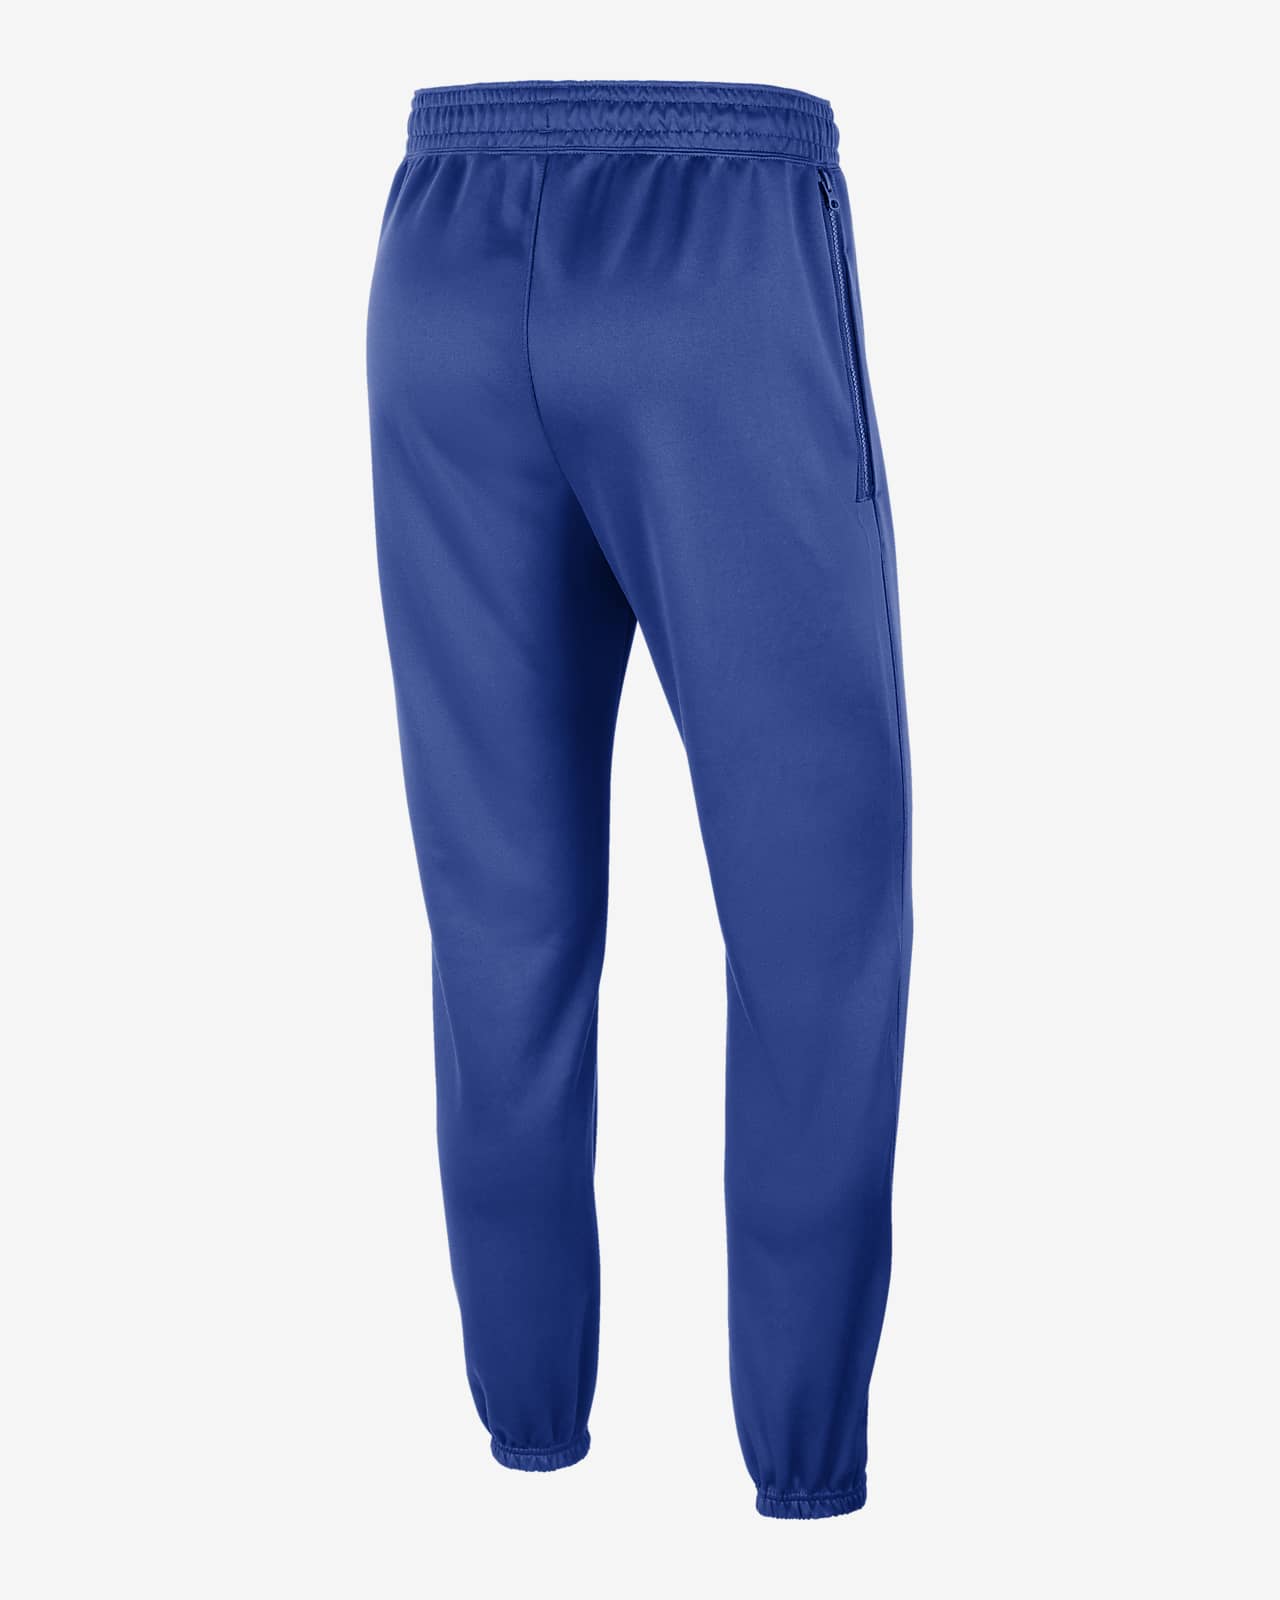 New York Knicks Nike Dri-Fit Golf Polo Shirt - Size XL Blue NBA Basketball